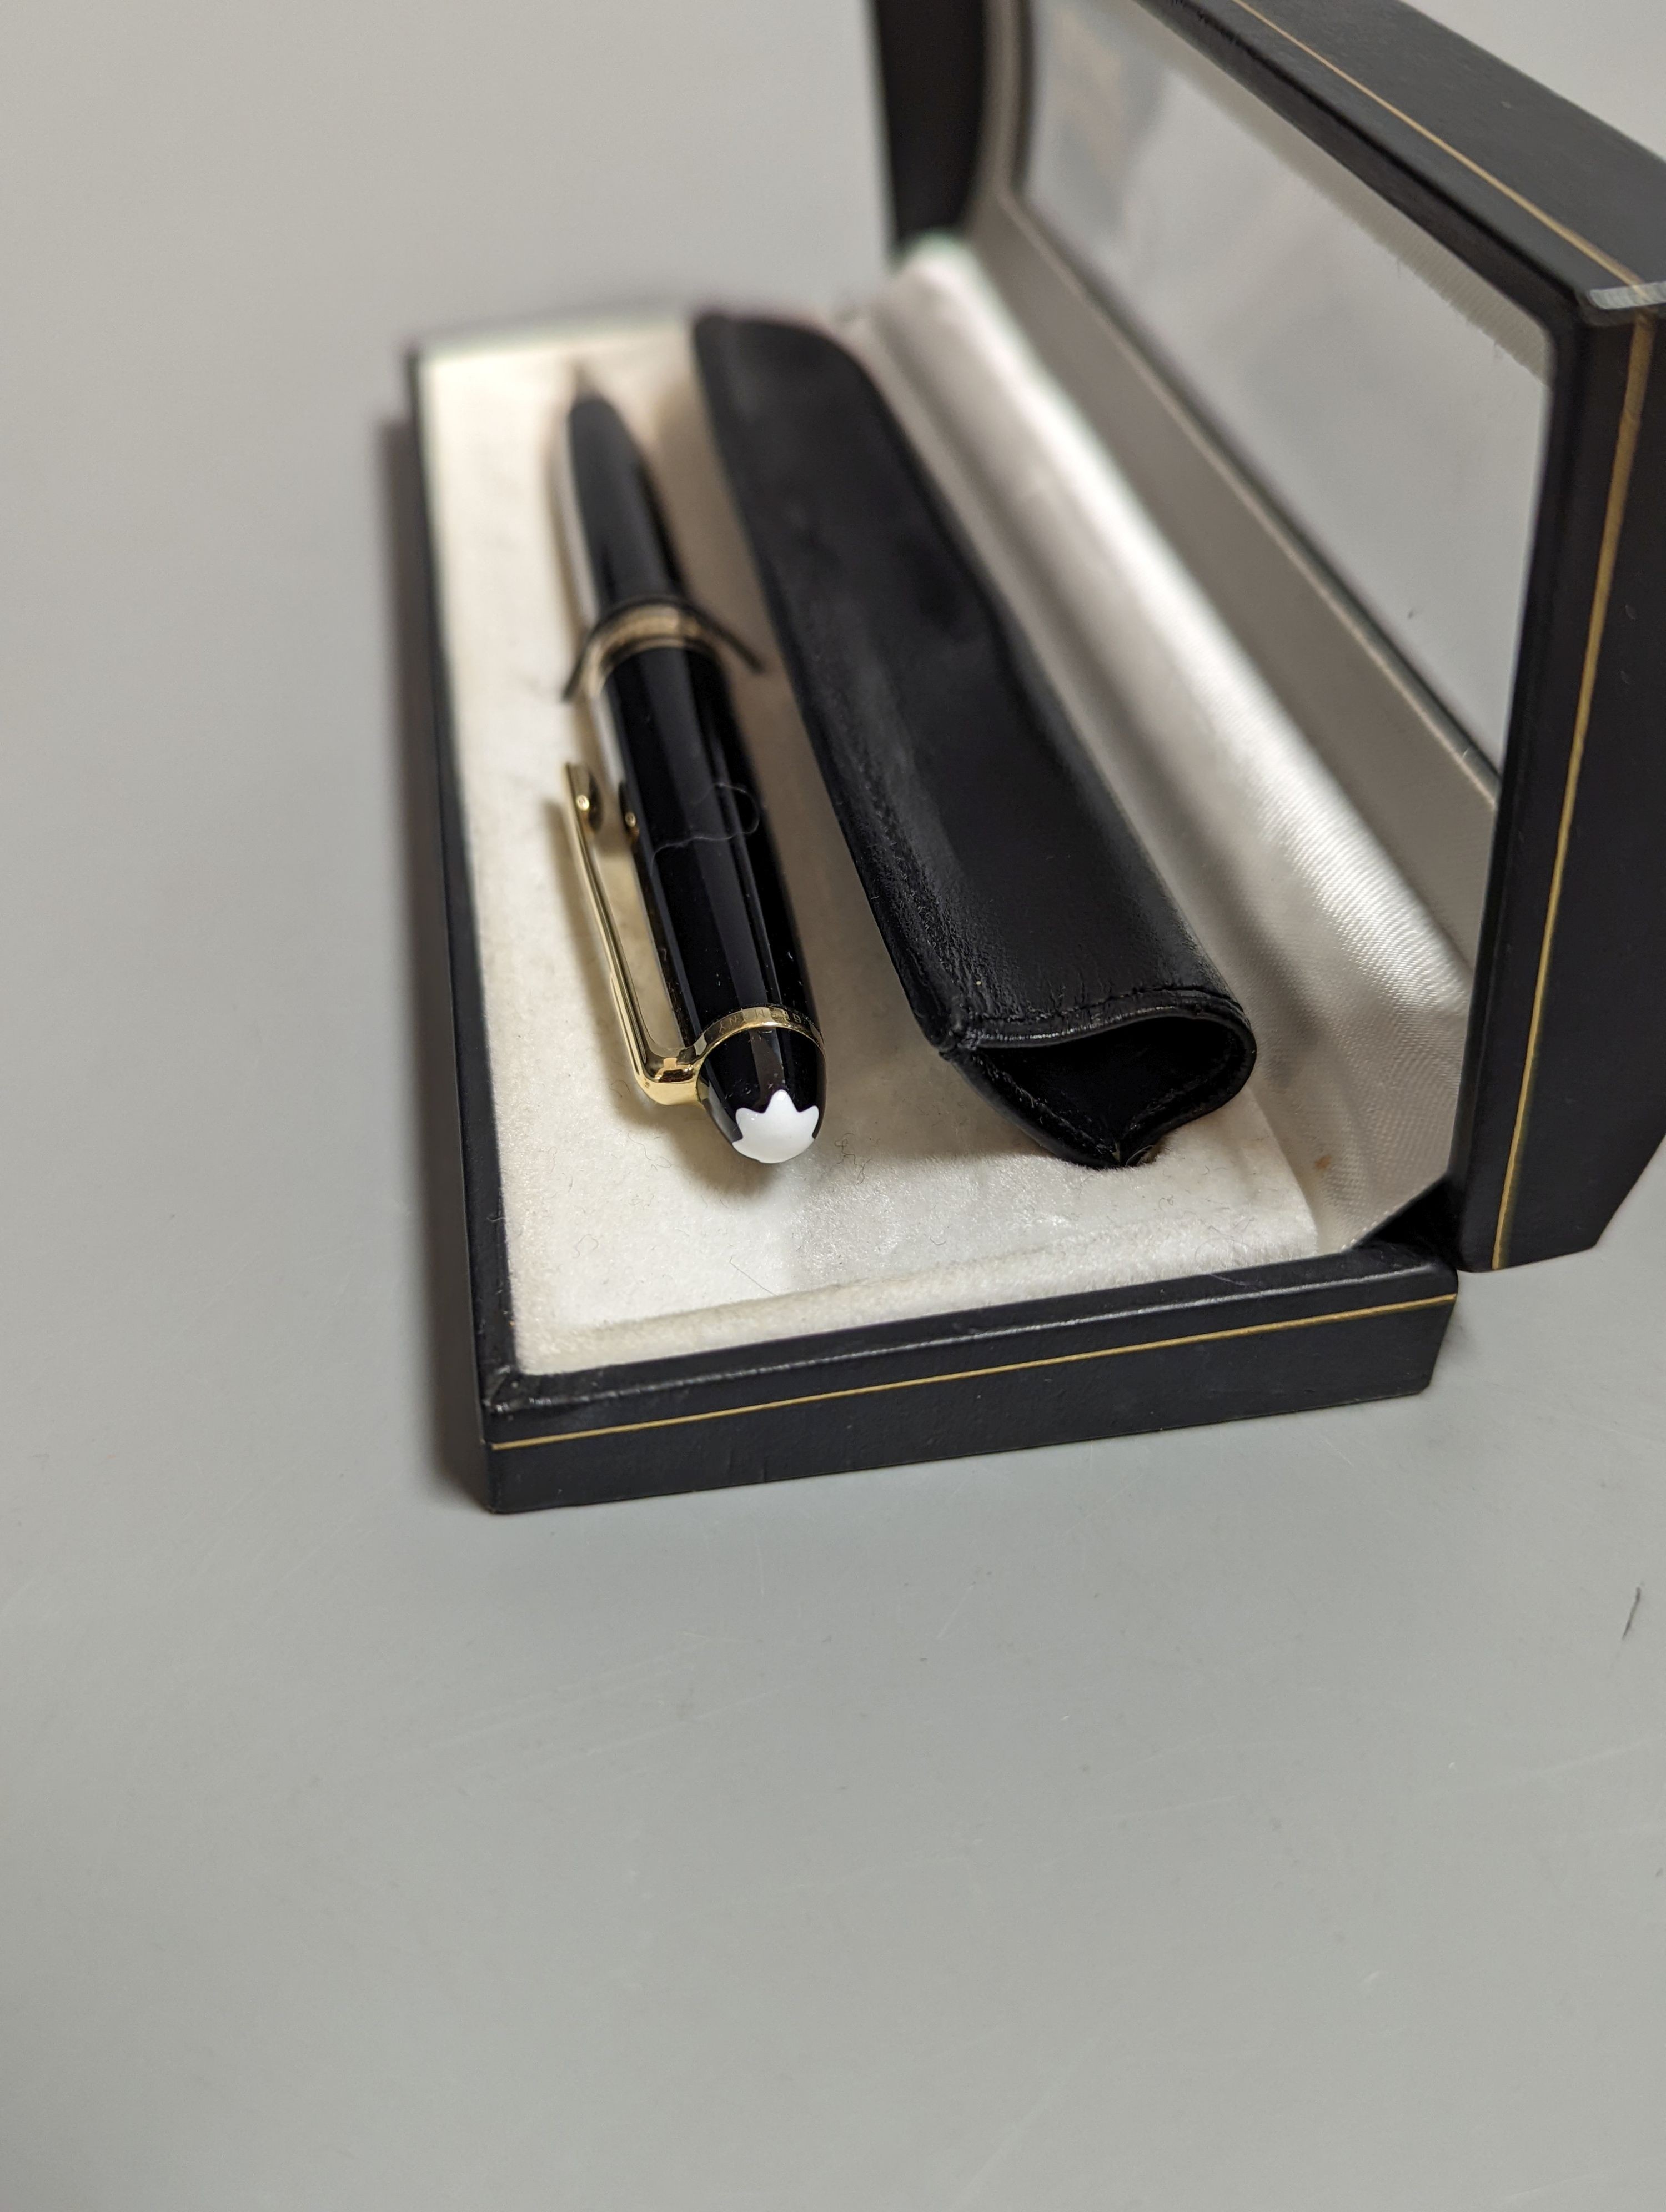 Two Montblanc ballpoint pens, boxed